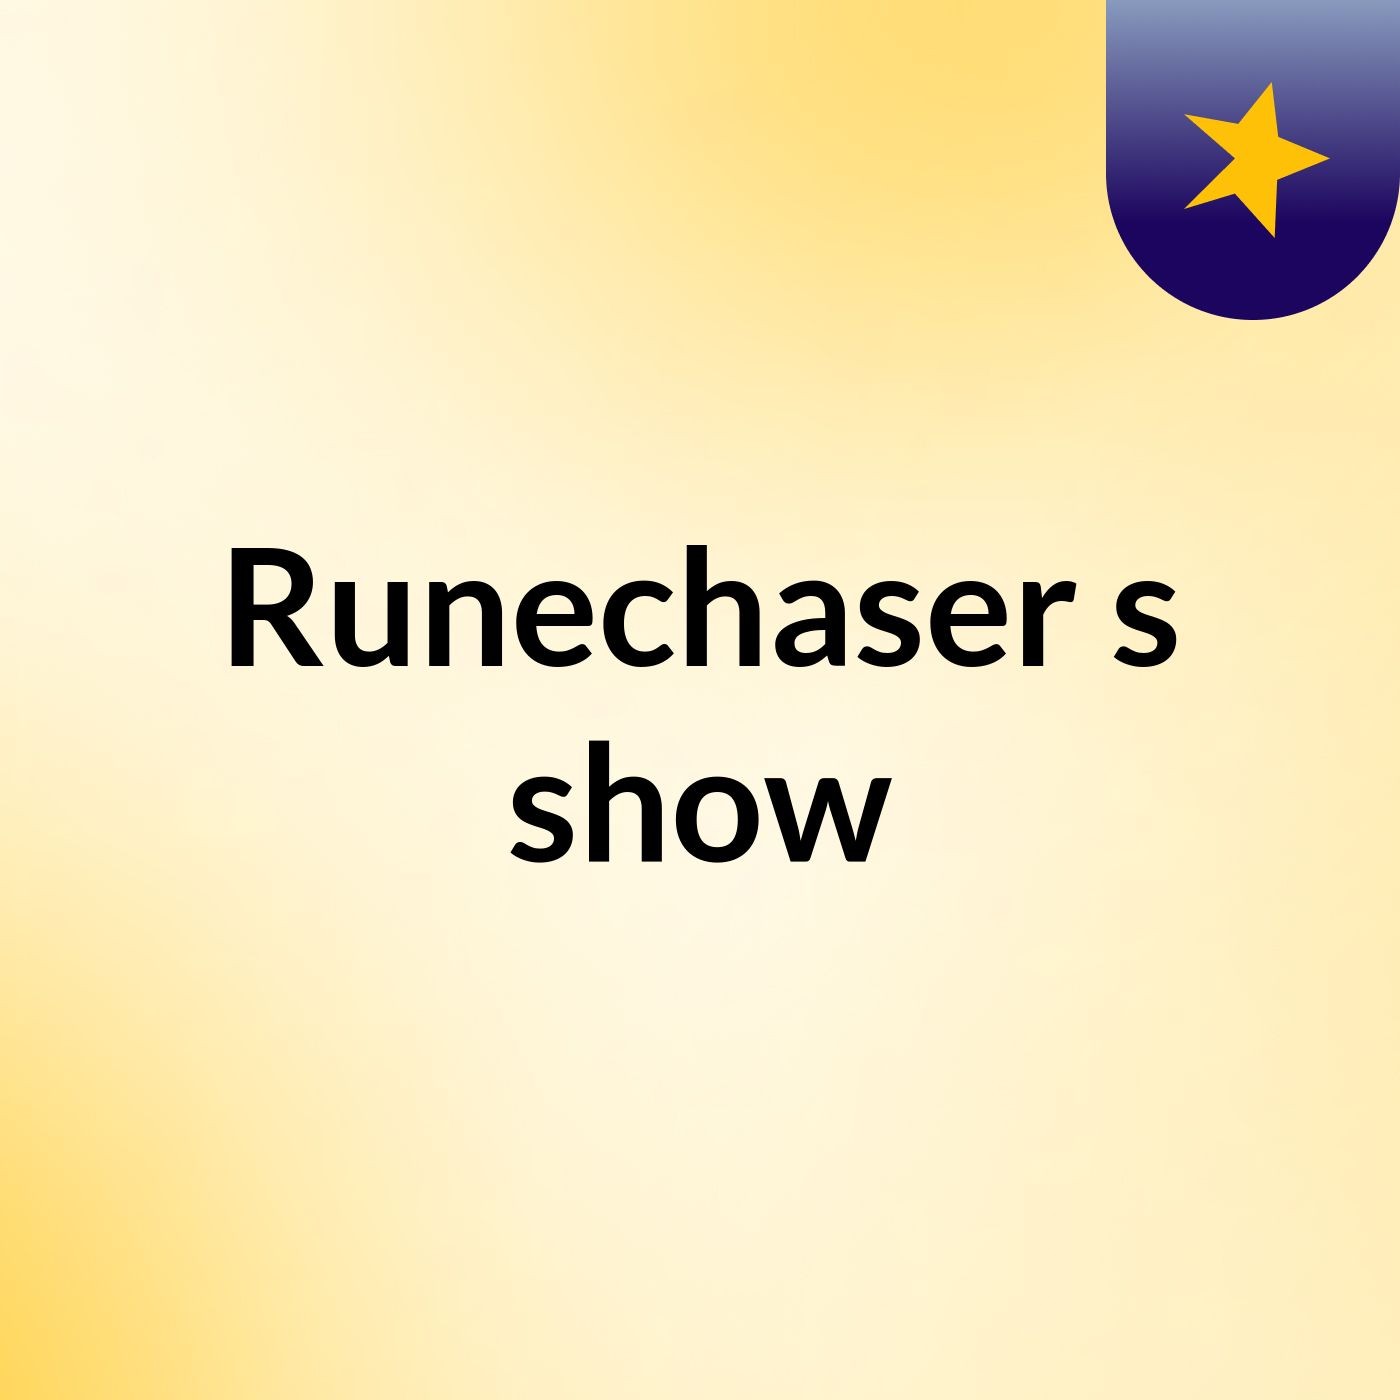 Runechaser's show